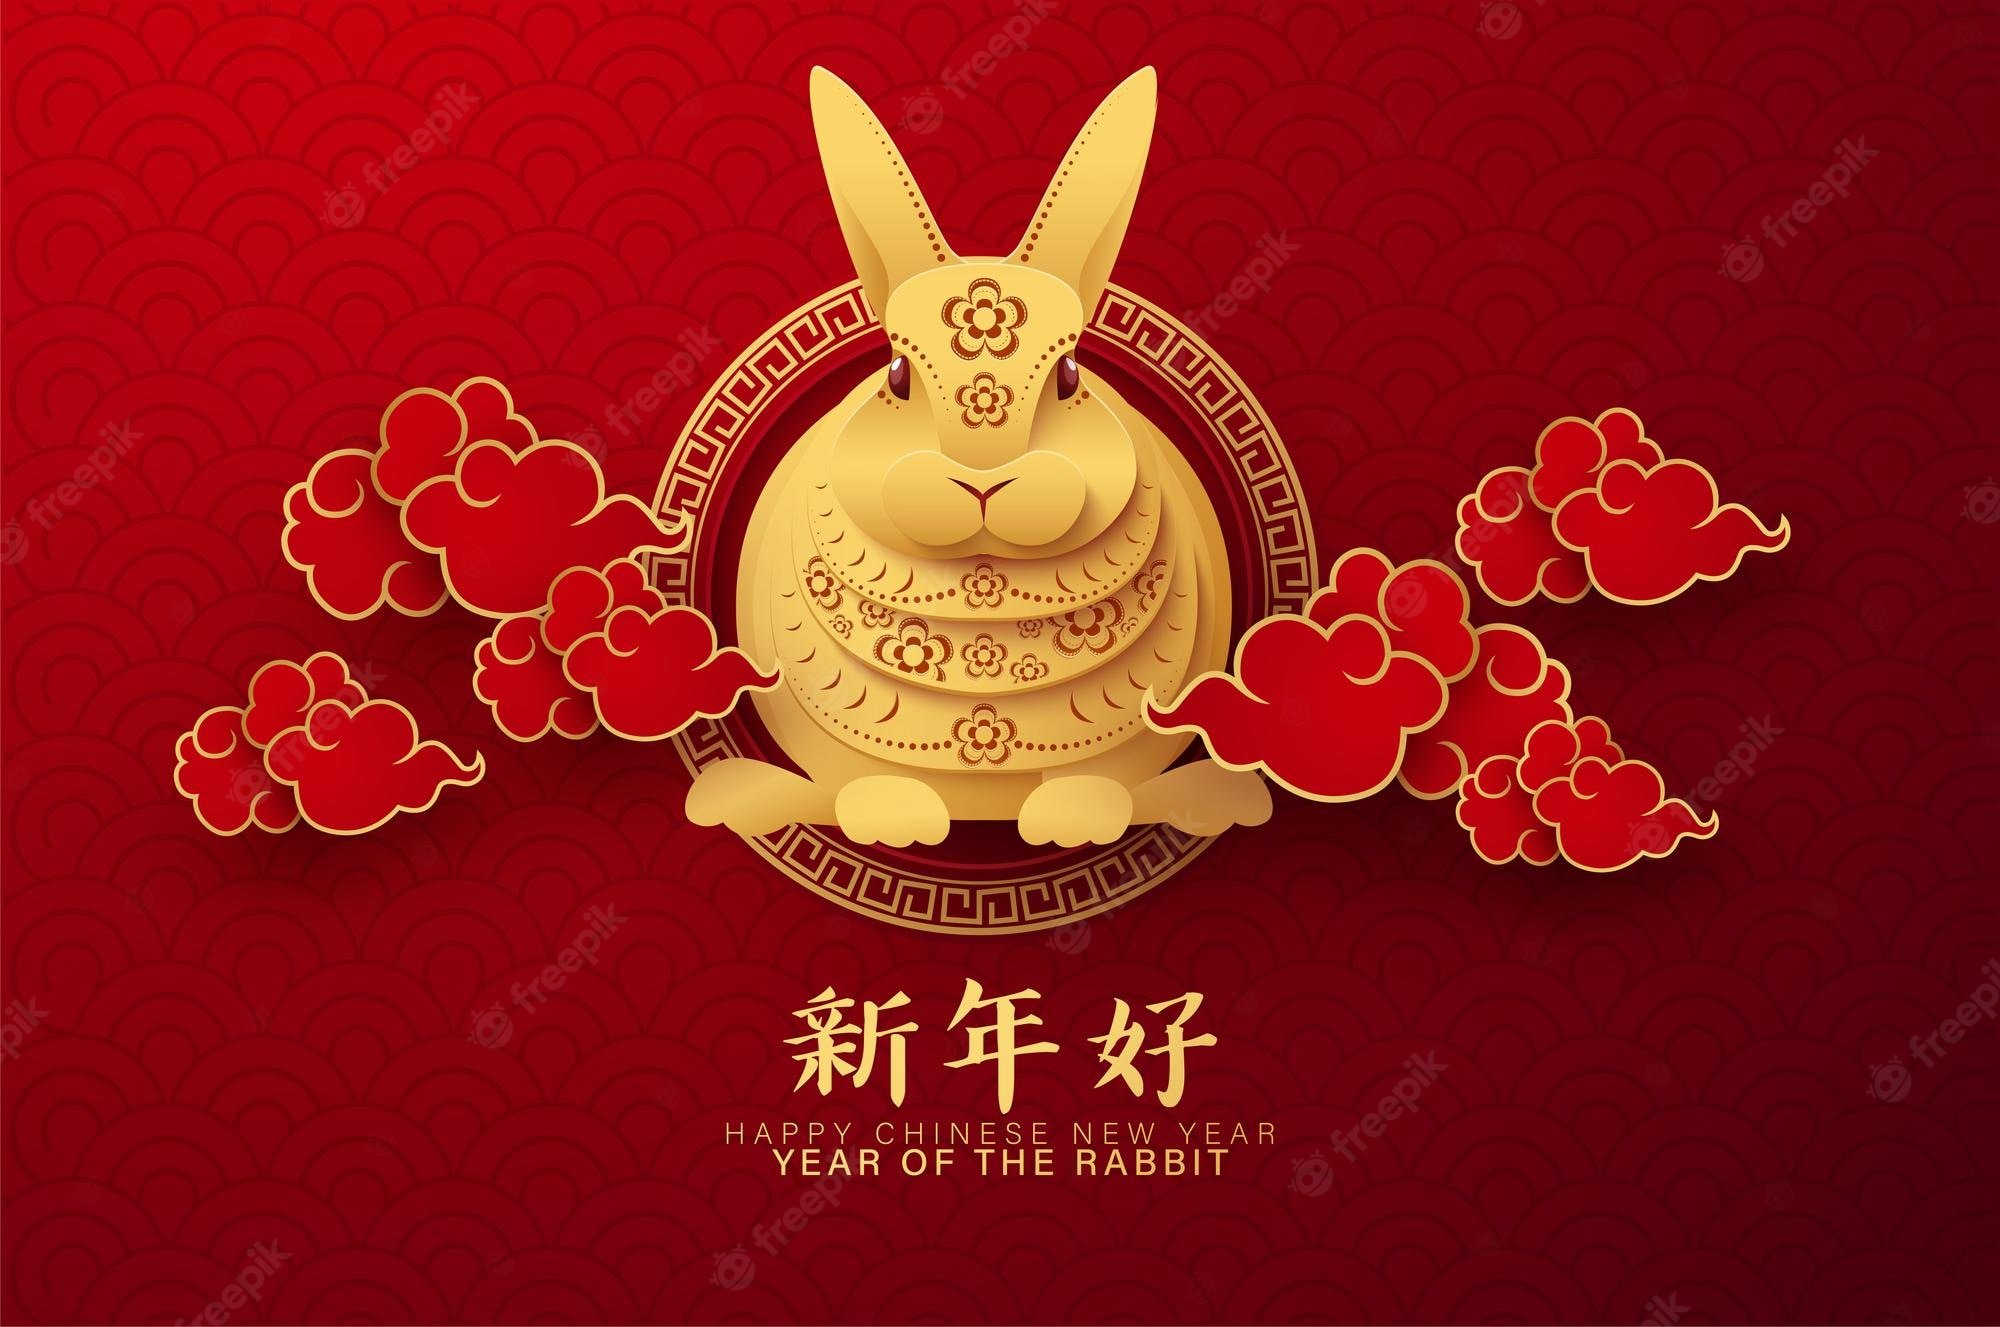 Chinese new year rabbit Image. Free Vectors, & PSD